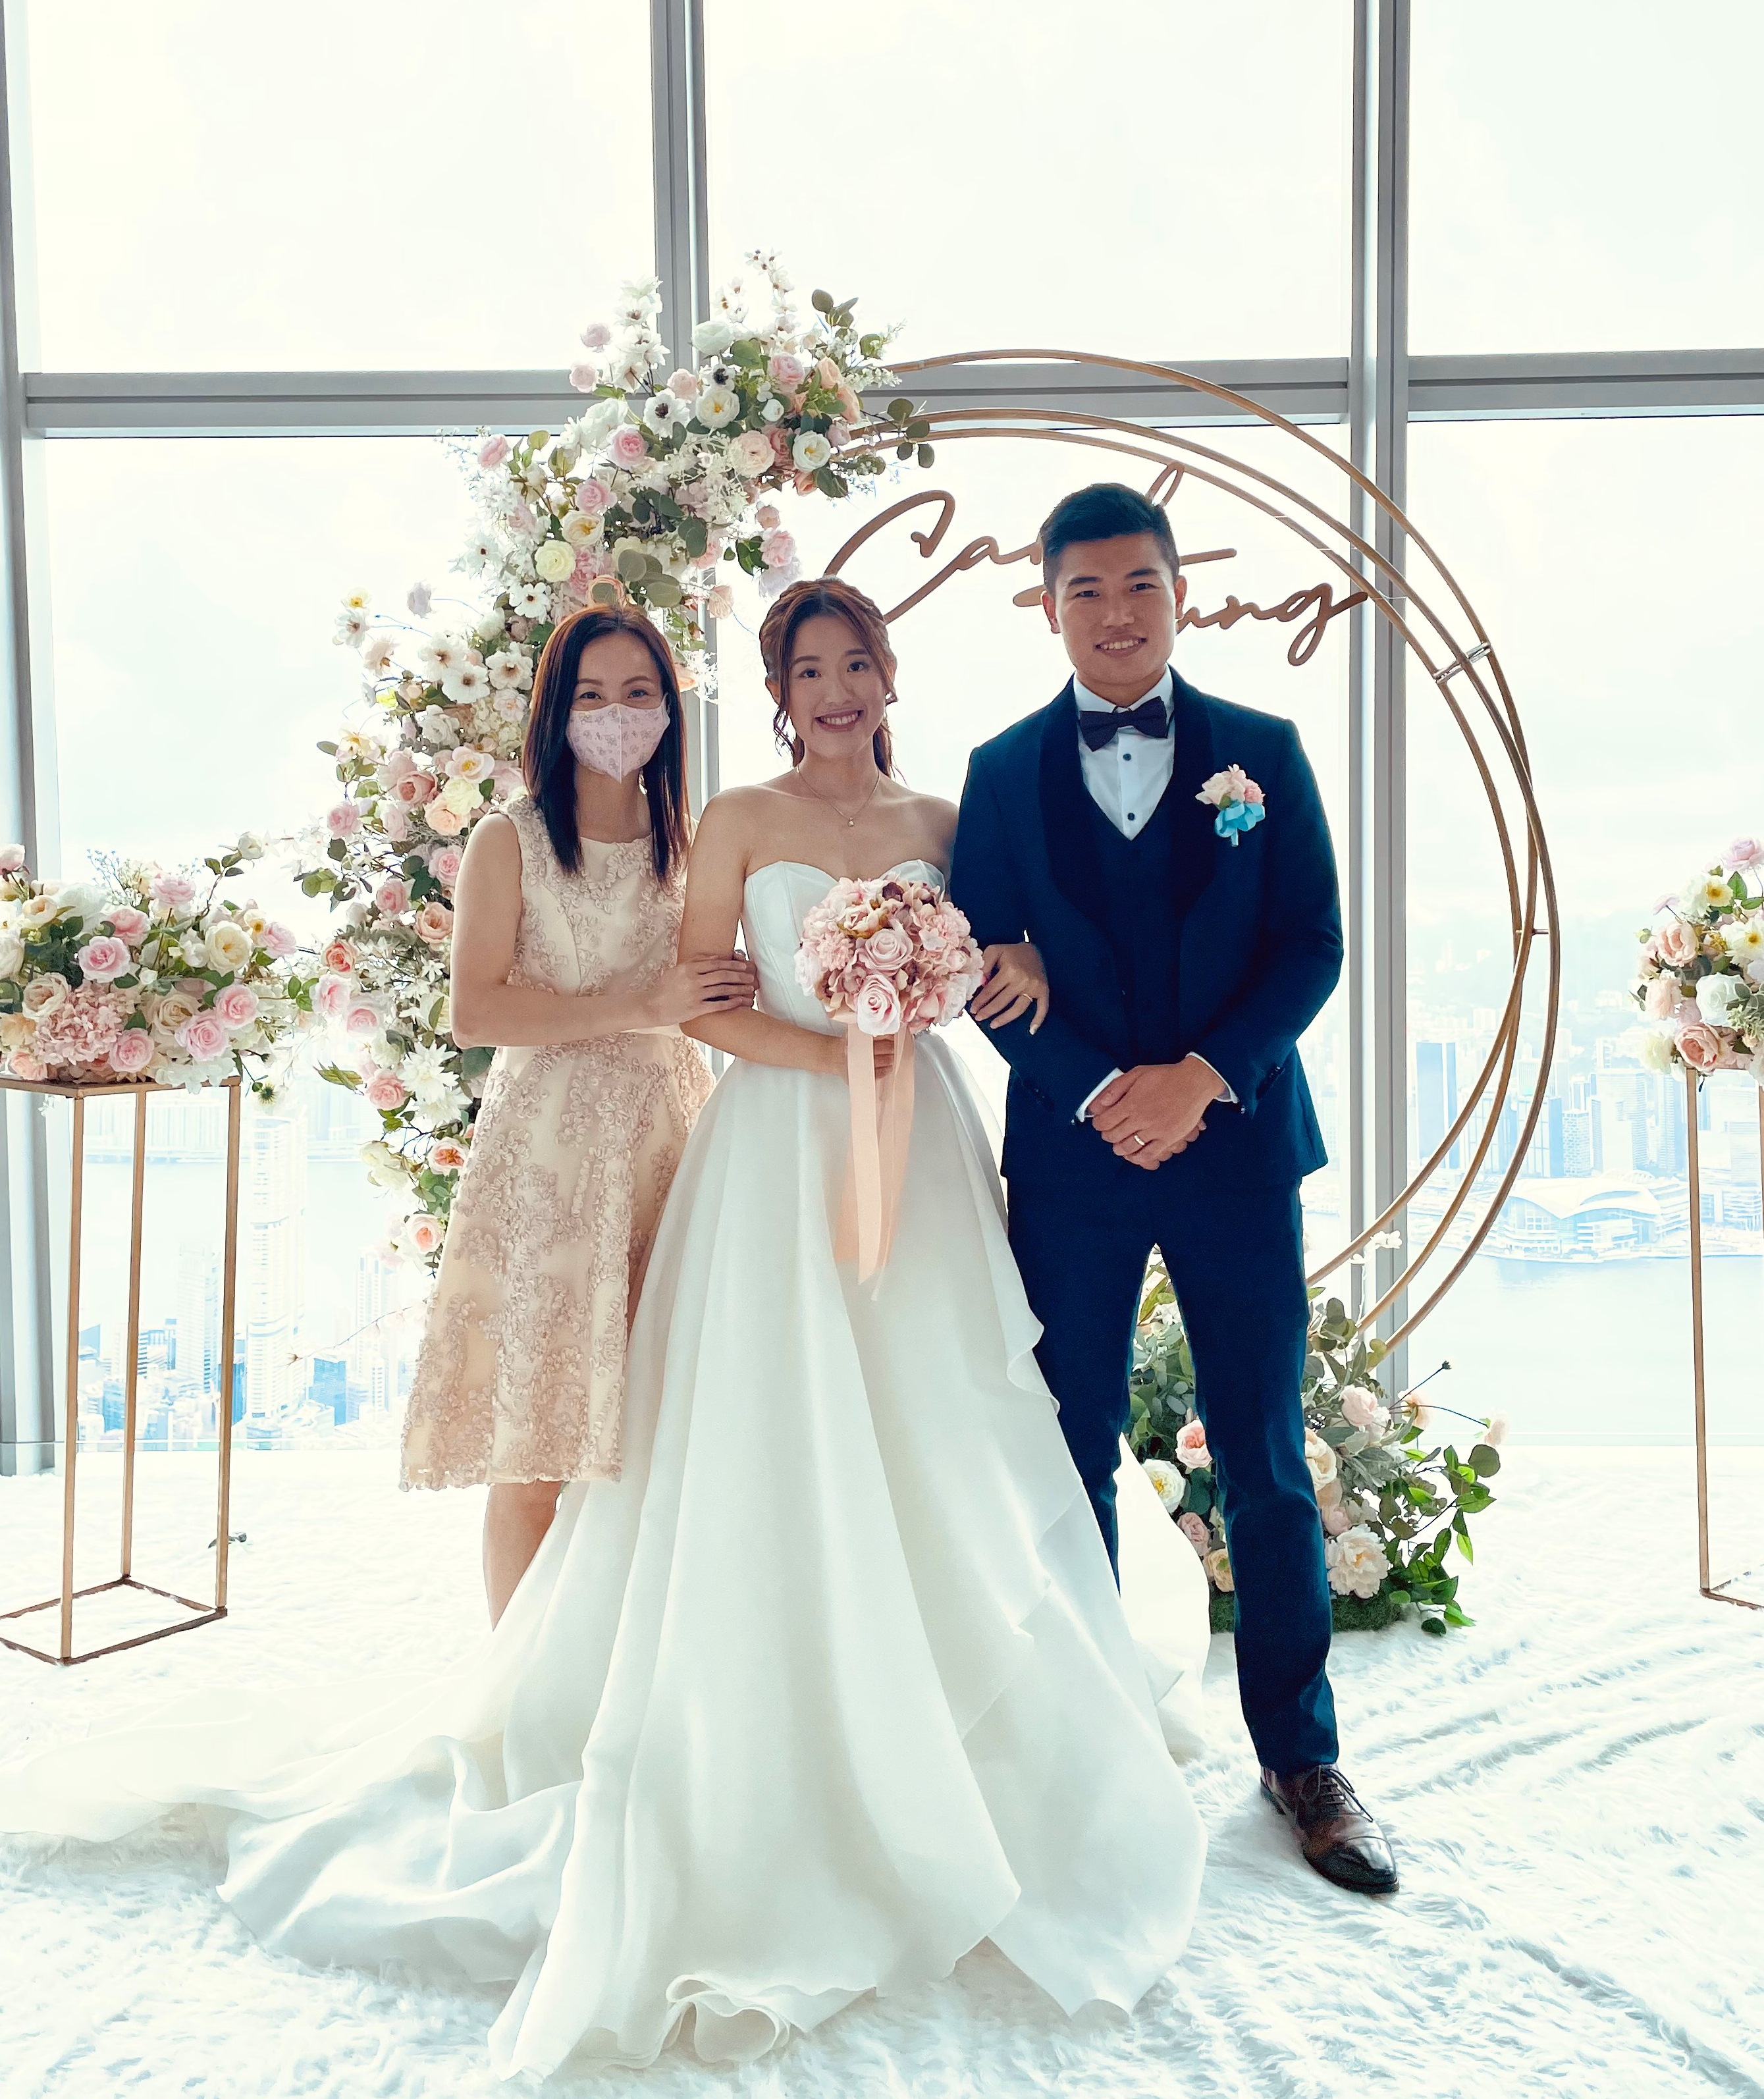 MC Angel Leung司儀工作紀錄: 半日婚禮統籌及婚禮司儀 Wedding Planner & Wedding MC @Ritz Caltron